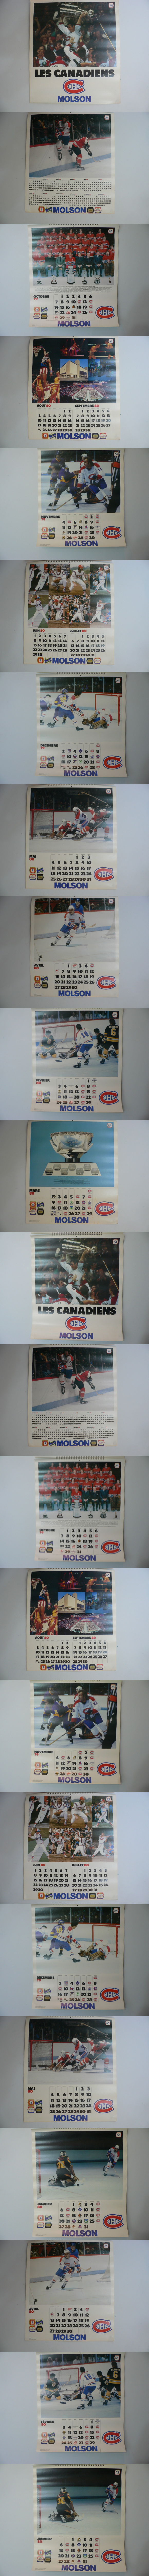 1979-80 MOLSON MONTREAL CANADIENS FULL CALENDAR photo